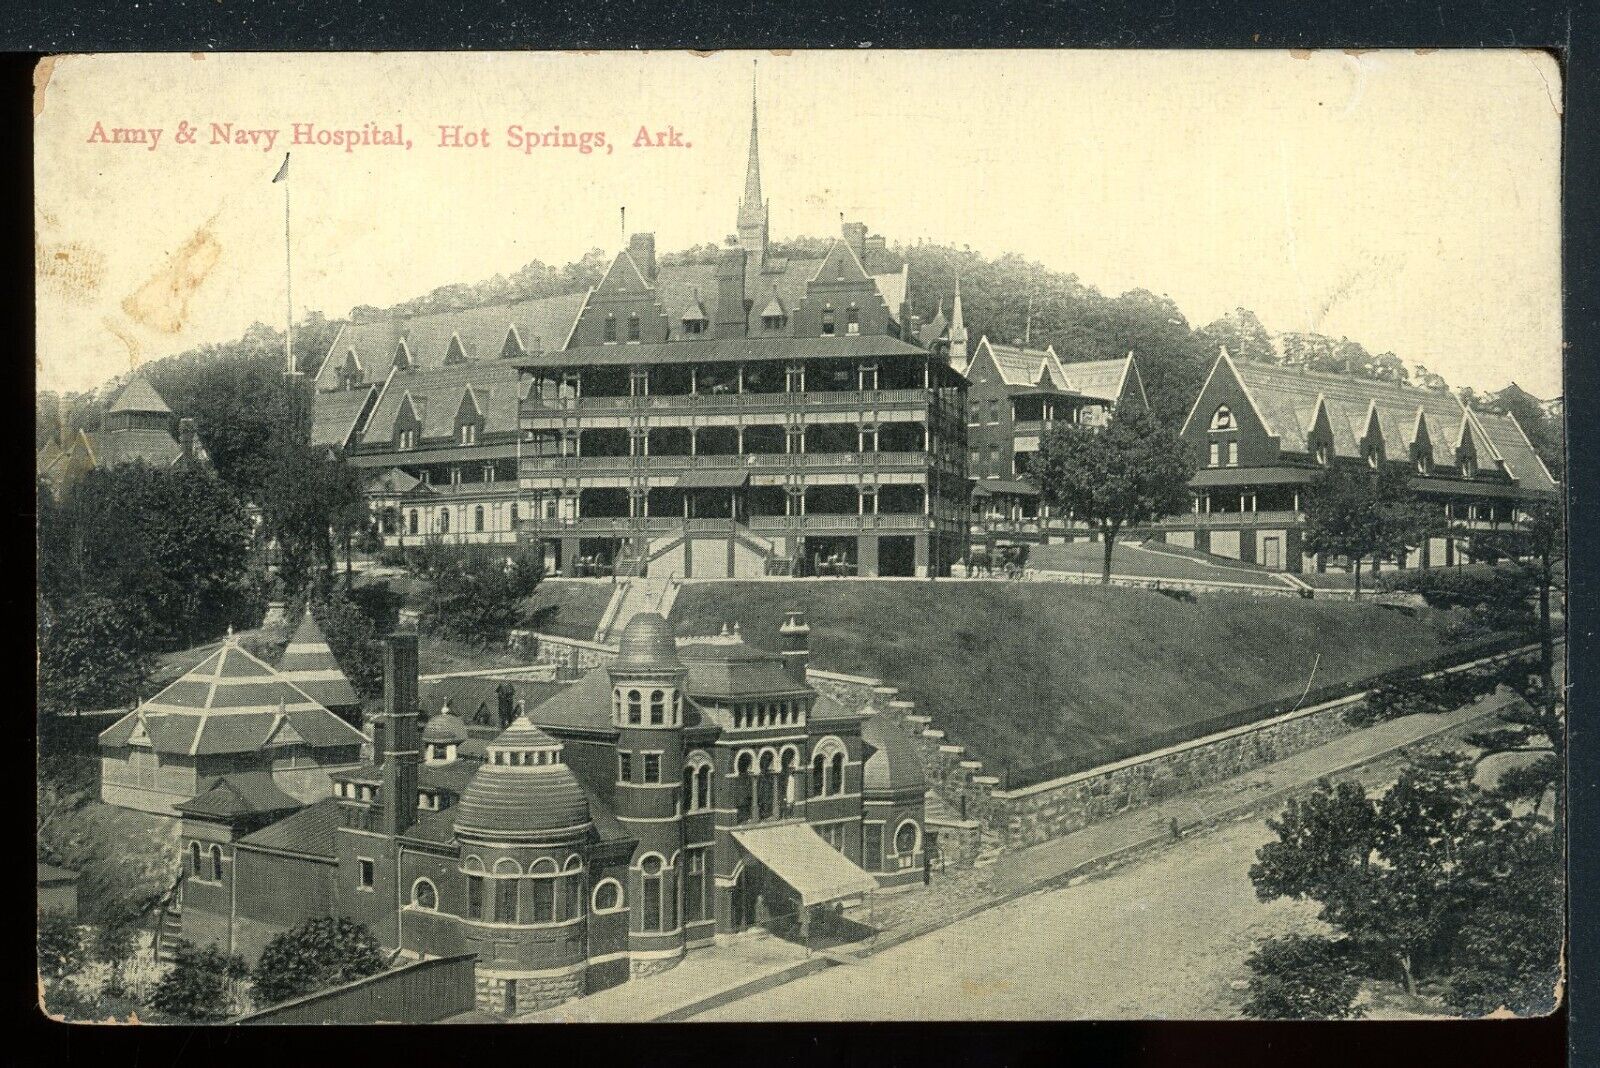 Early Hot Springs Arkansas Army & Navy Hospital Historic Vintage Postcard M1538a